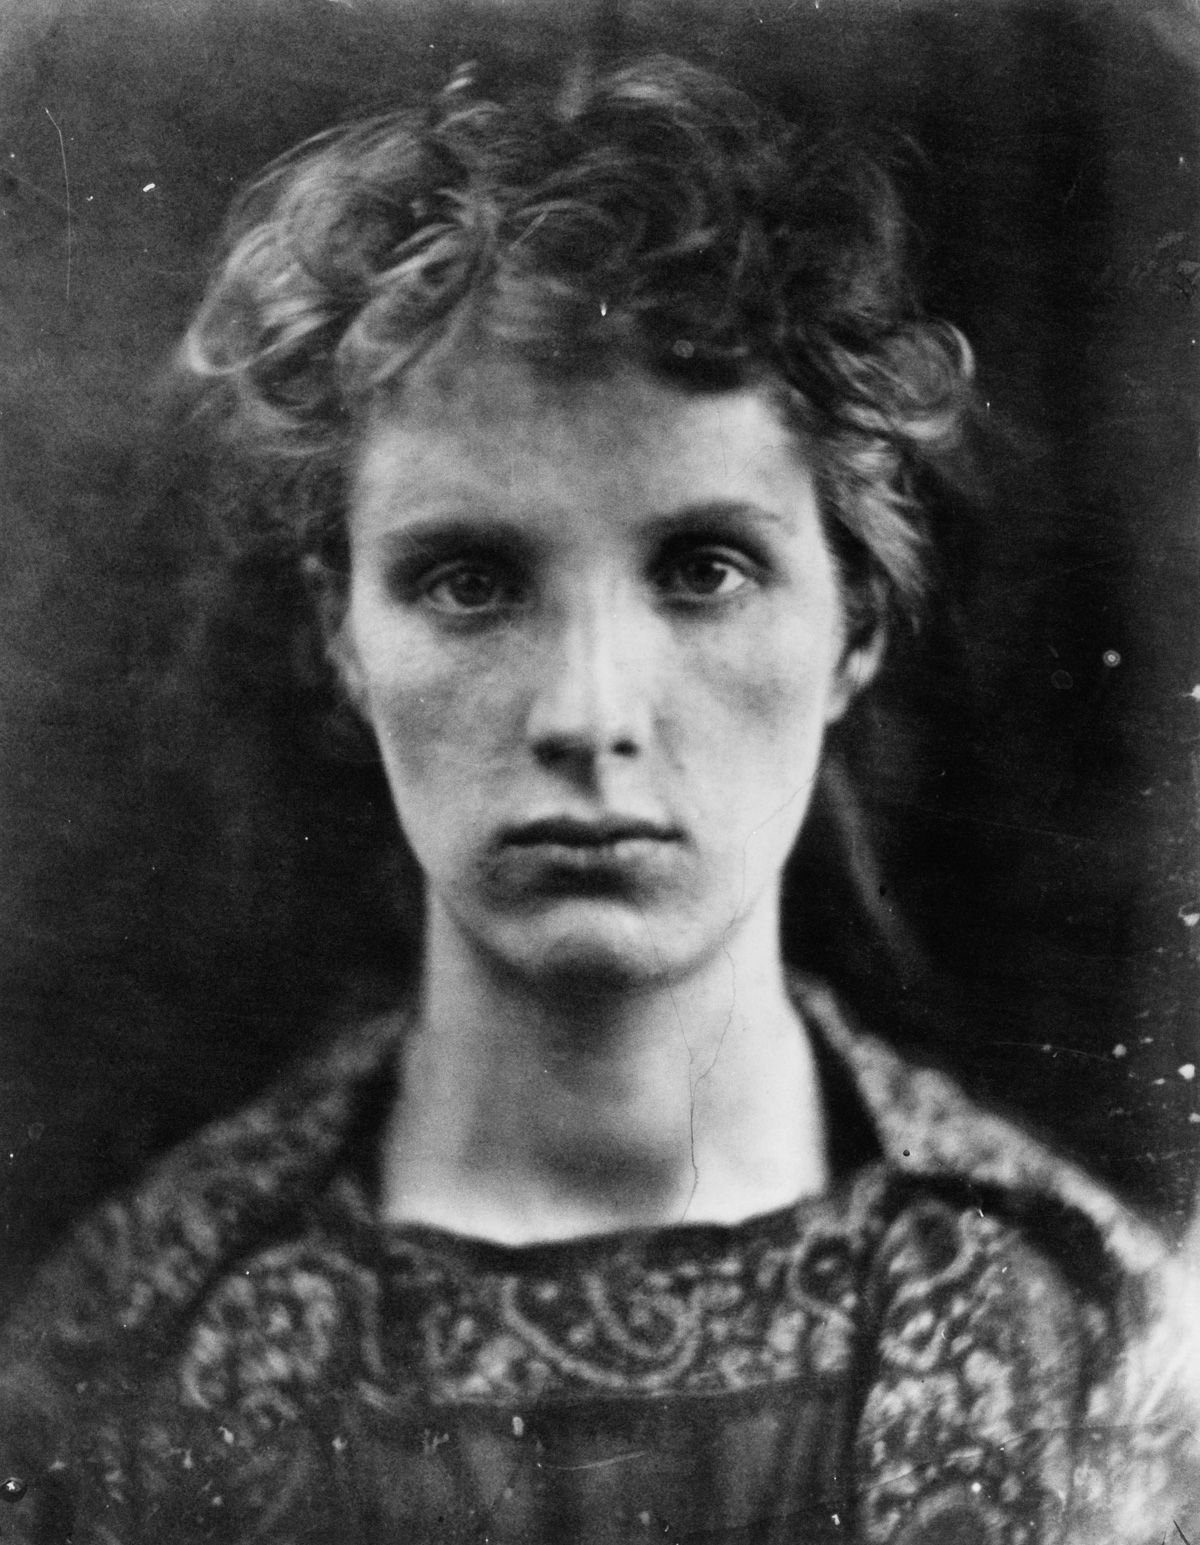 Julia Margaret Cameron portraits 1866 Cassiopeia, an allegorical portrait.